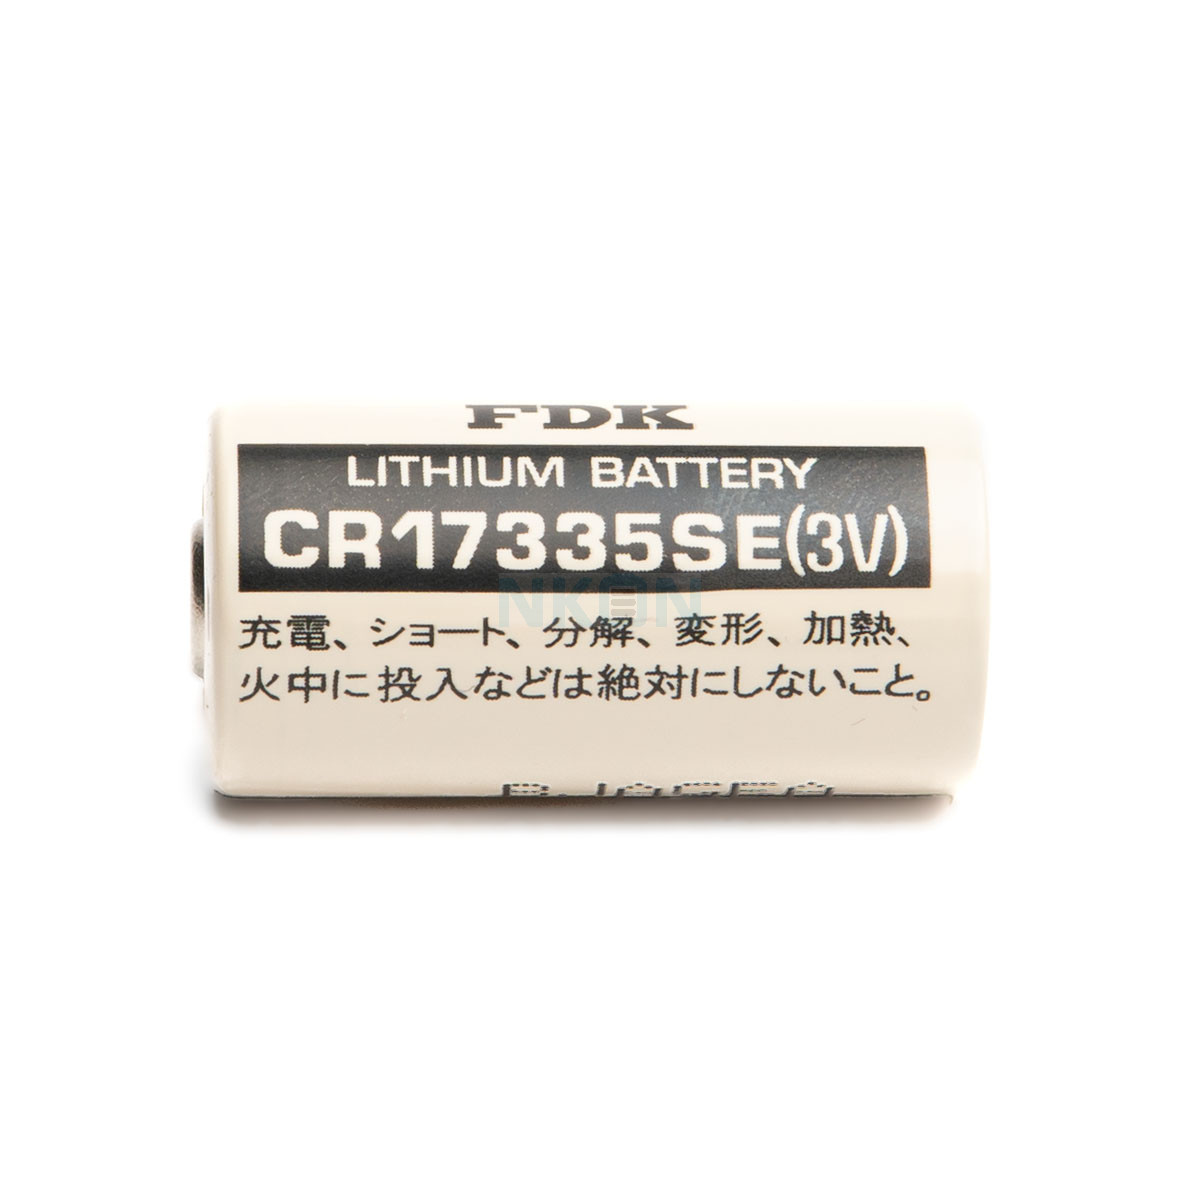 Pile CR17335SE - 2/3A - Pile lithium 3V